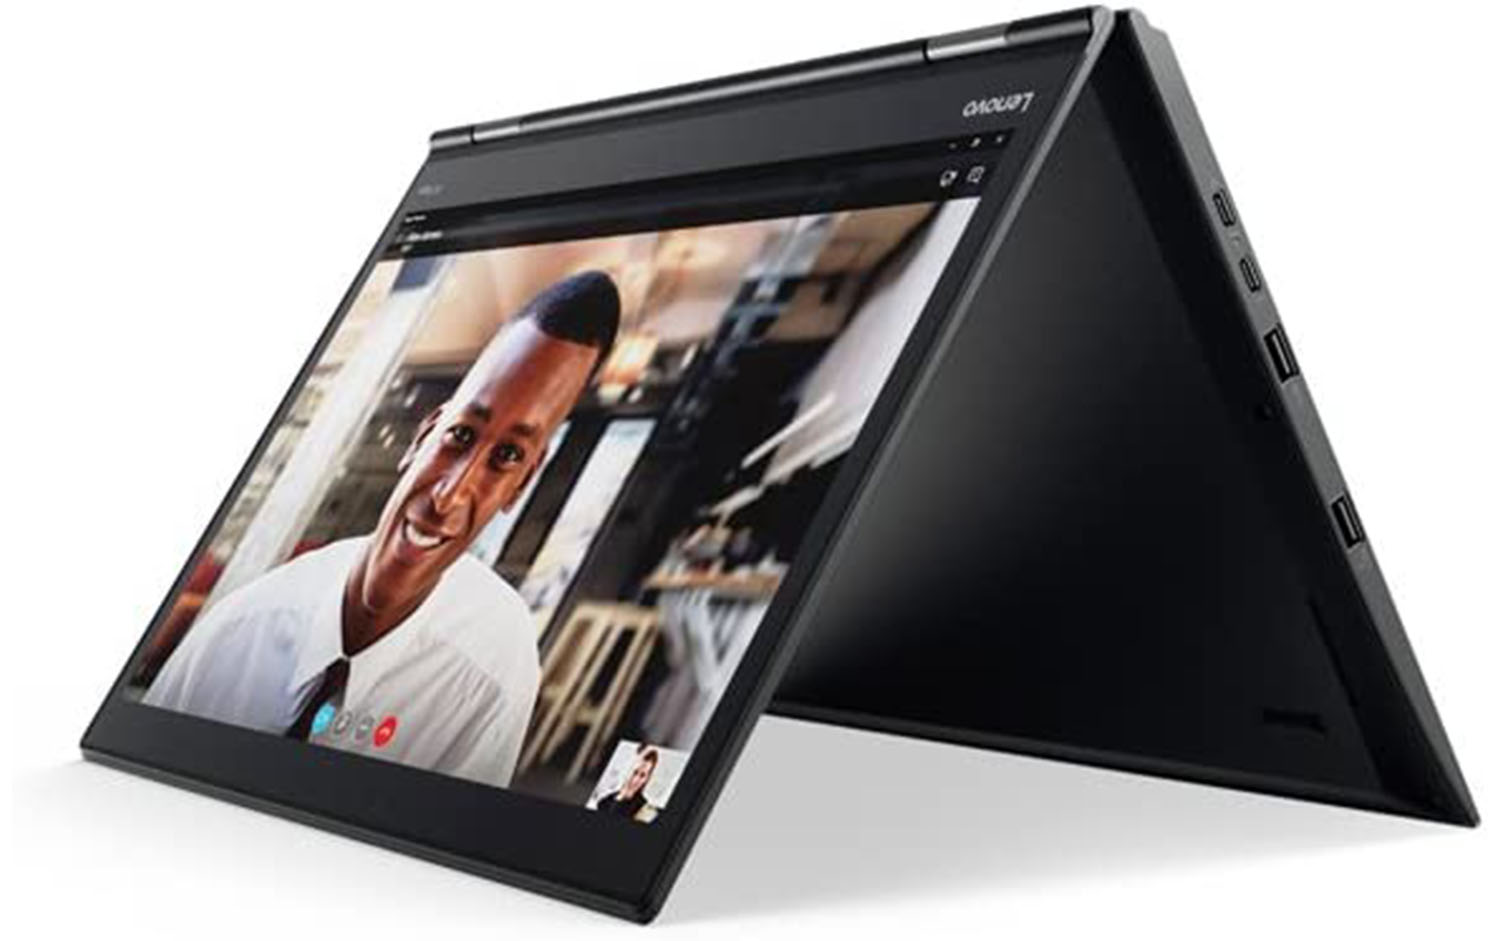 Lenovo ThinkPad X1 Yoga Gen 2 Intel Core i7 7th Gen 8GB RAM 256GB SSD Touchscreen Windows 10 Pro